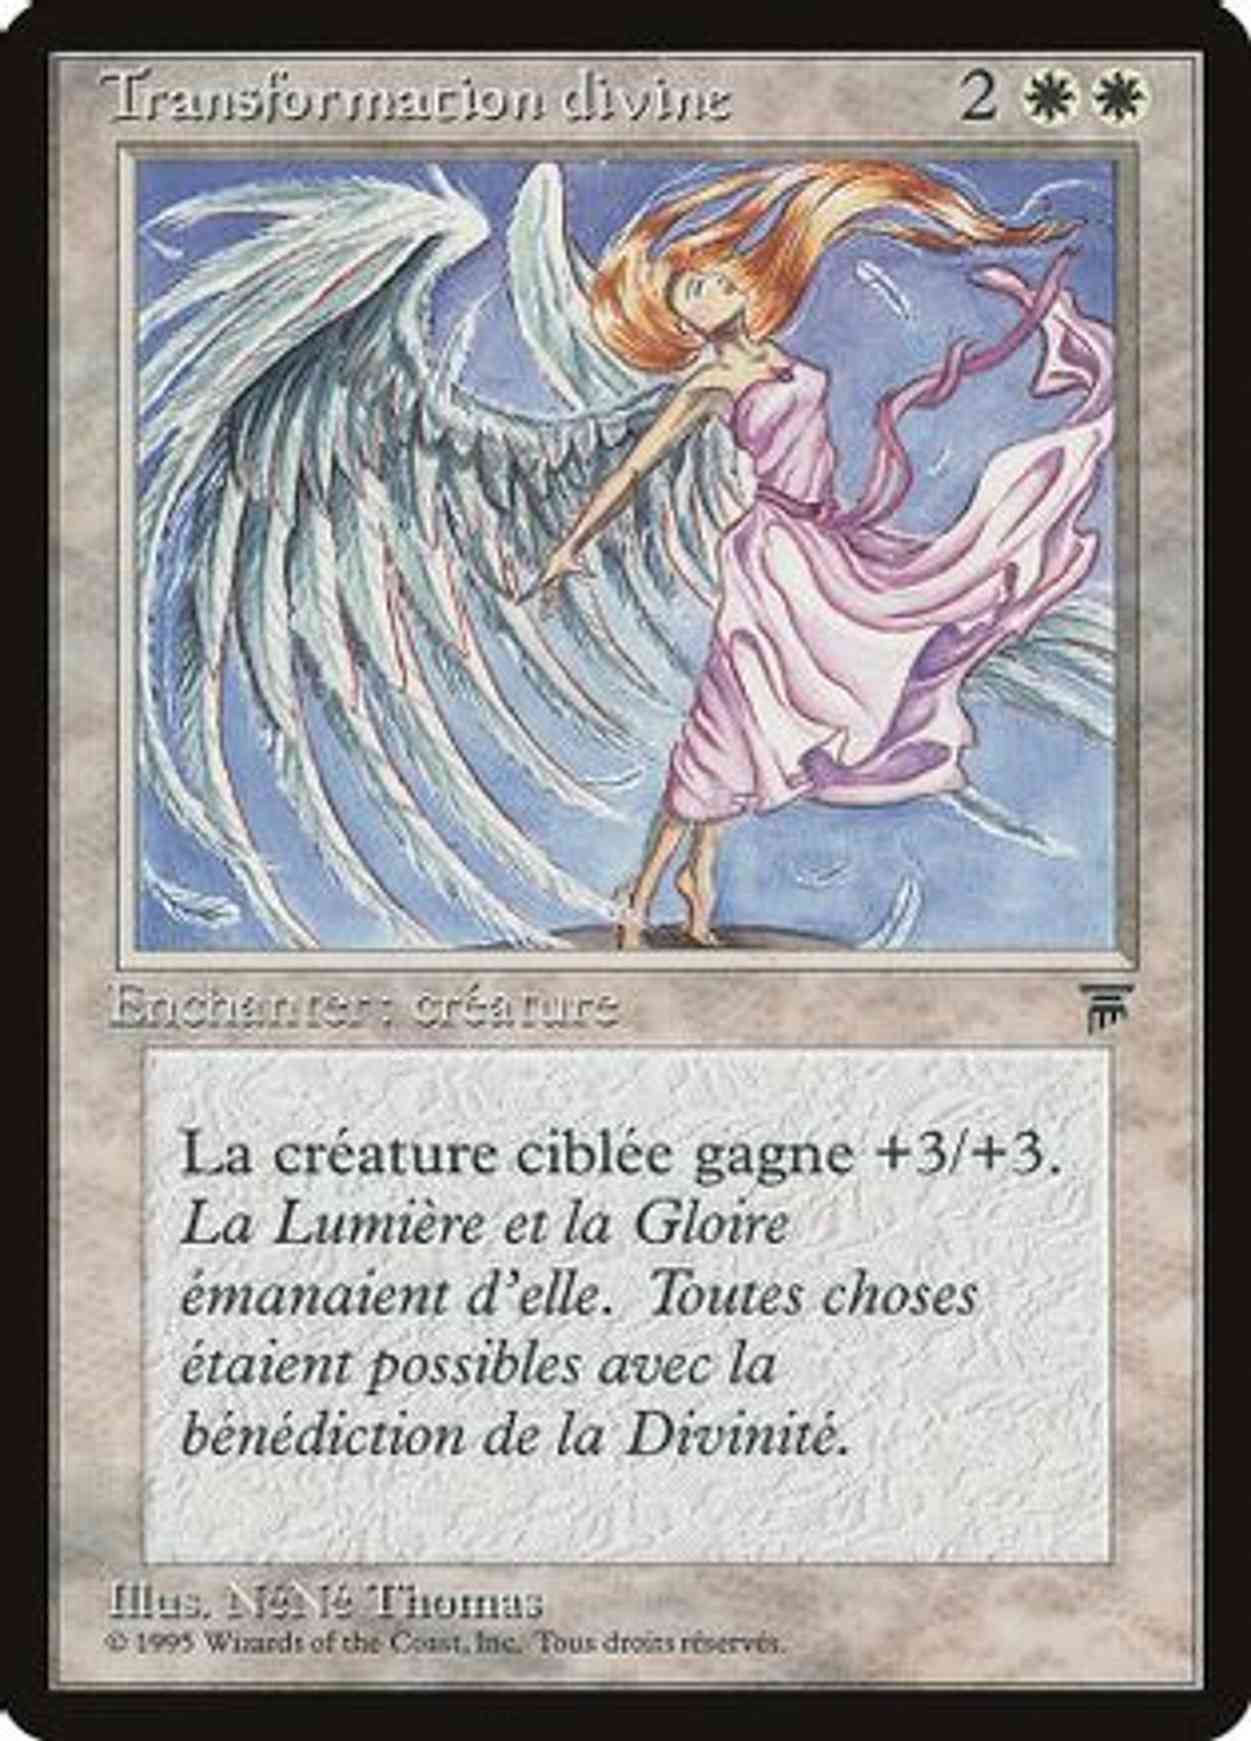 Divine Transformation (French) - "Transformation divine" magic card front